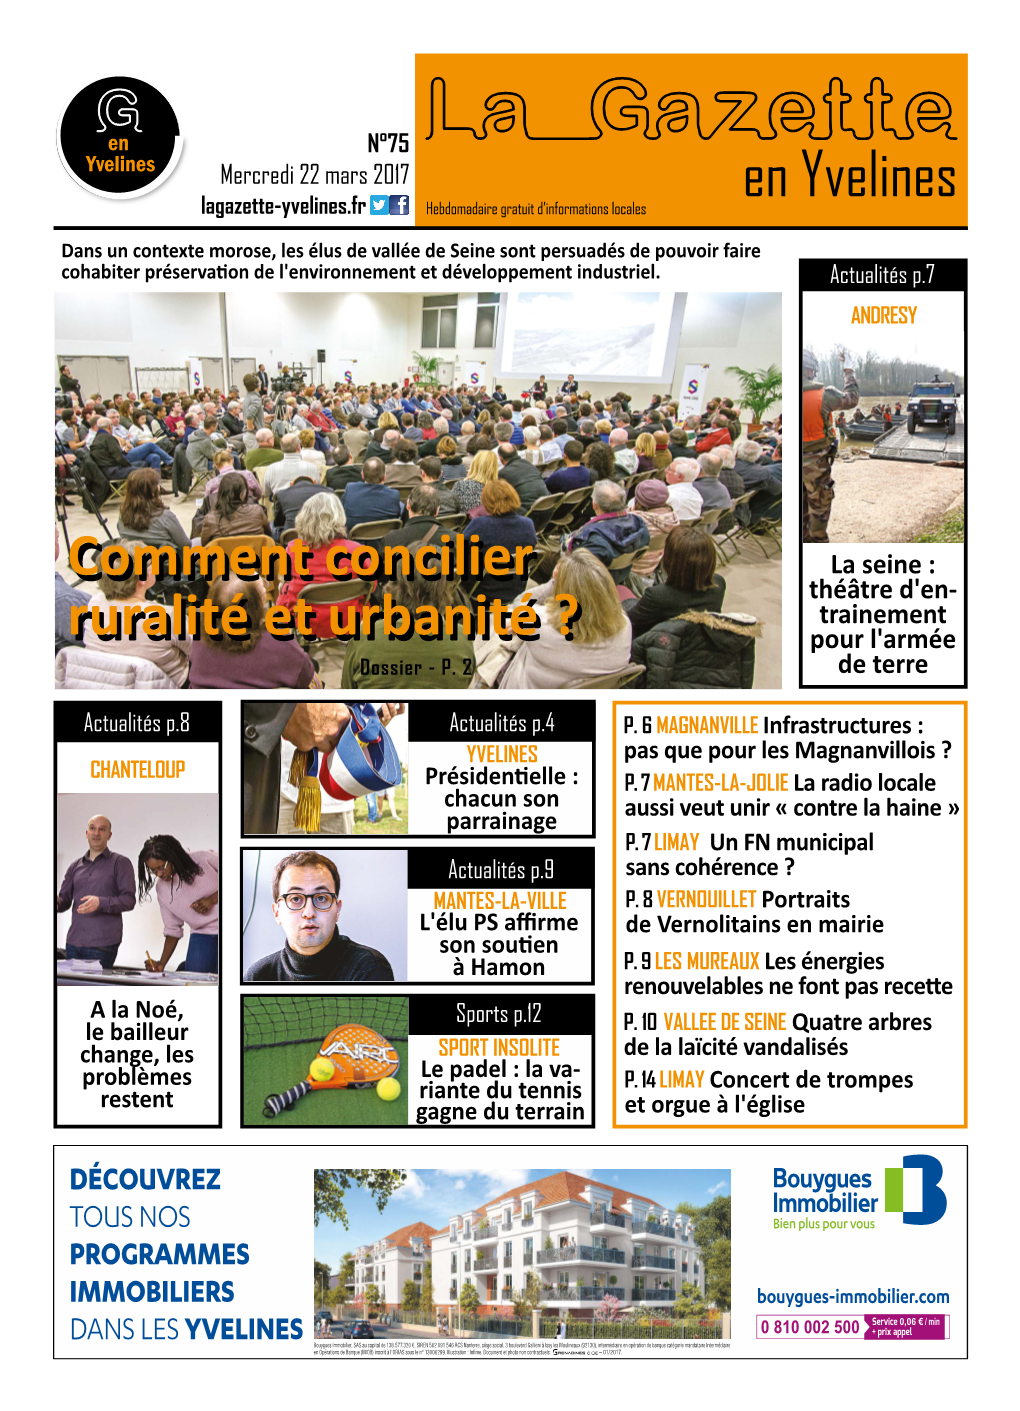 La Gazette Yvelines Mercredi 22 Mars 2017 En Yvelines Lagazette-Yvelines.Fr Hebdomadaire Gratuit D’Informations Locales